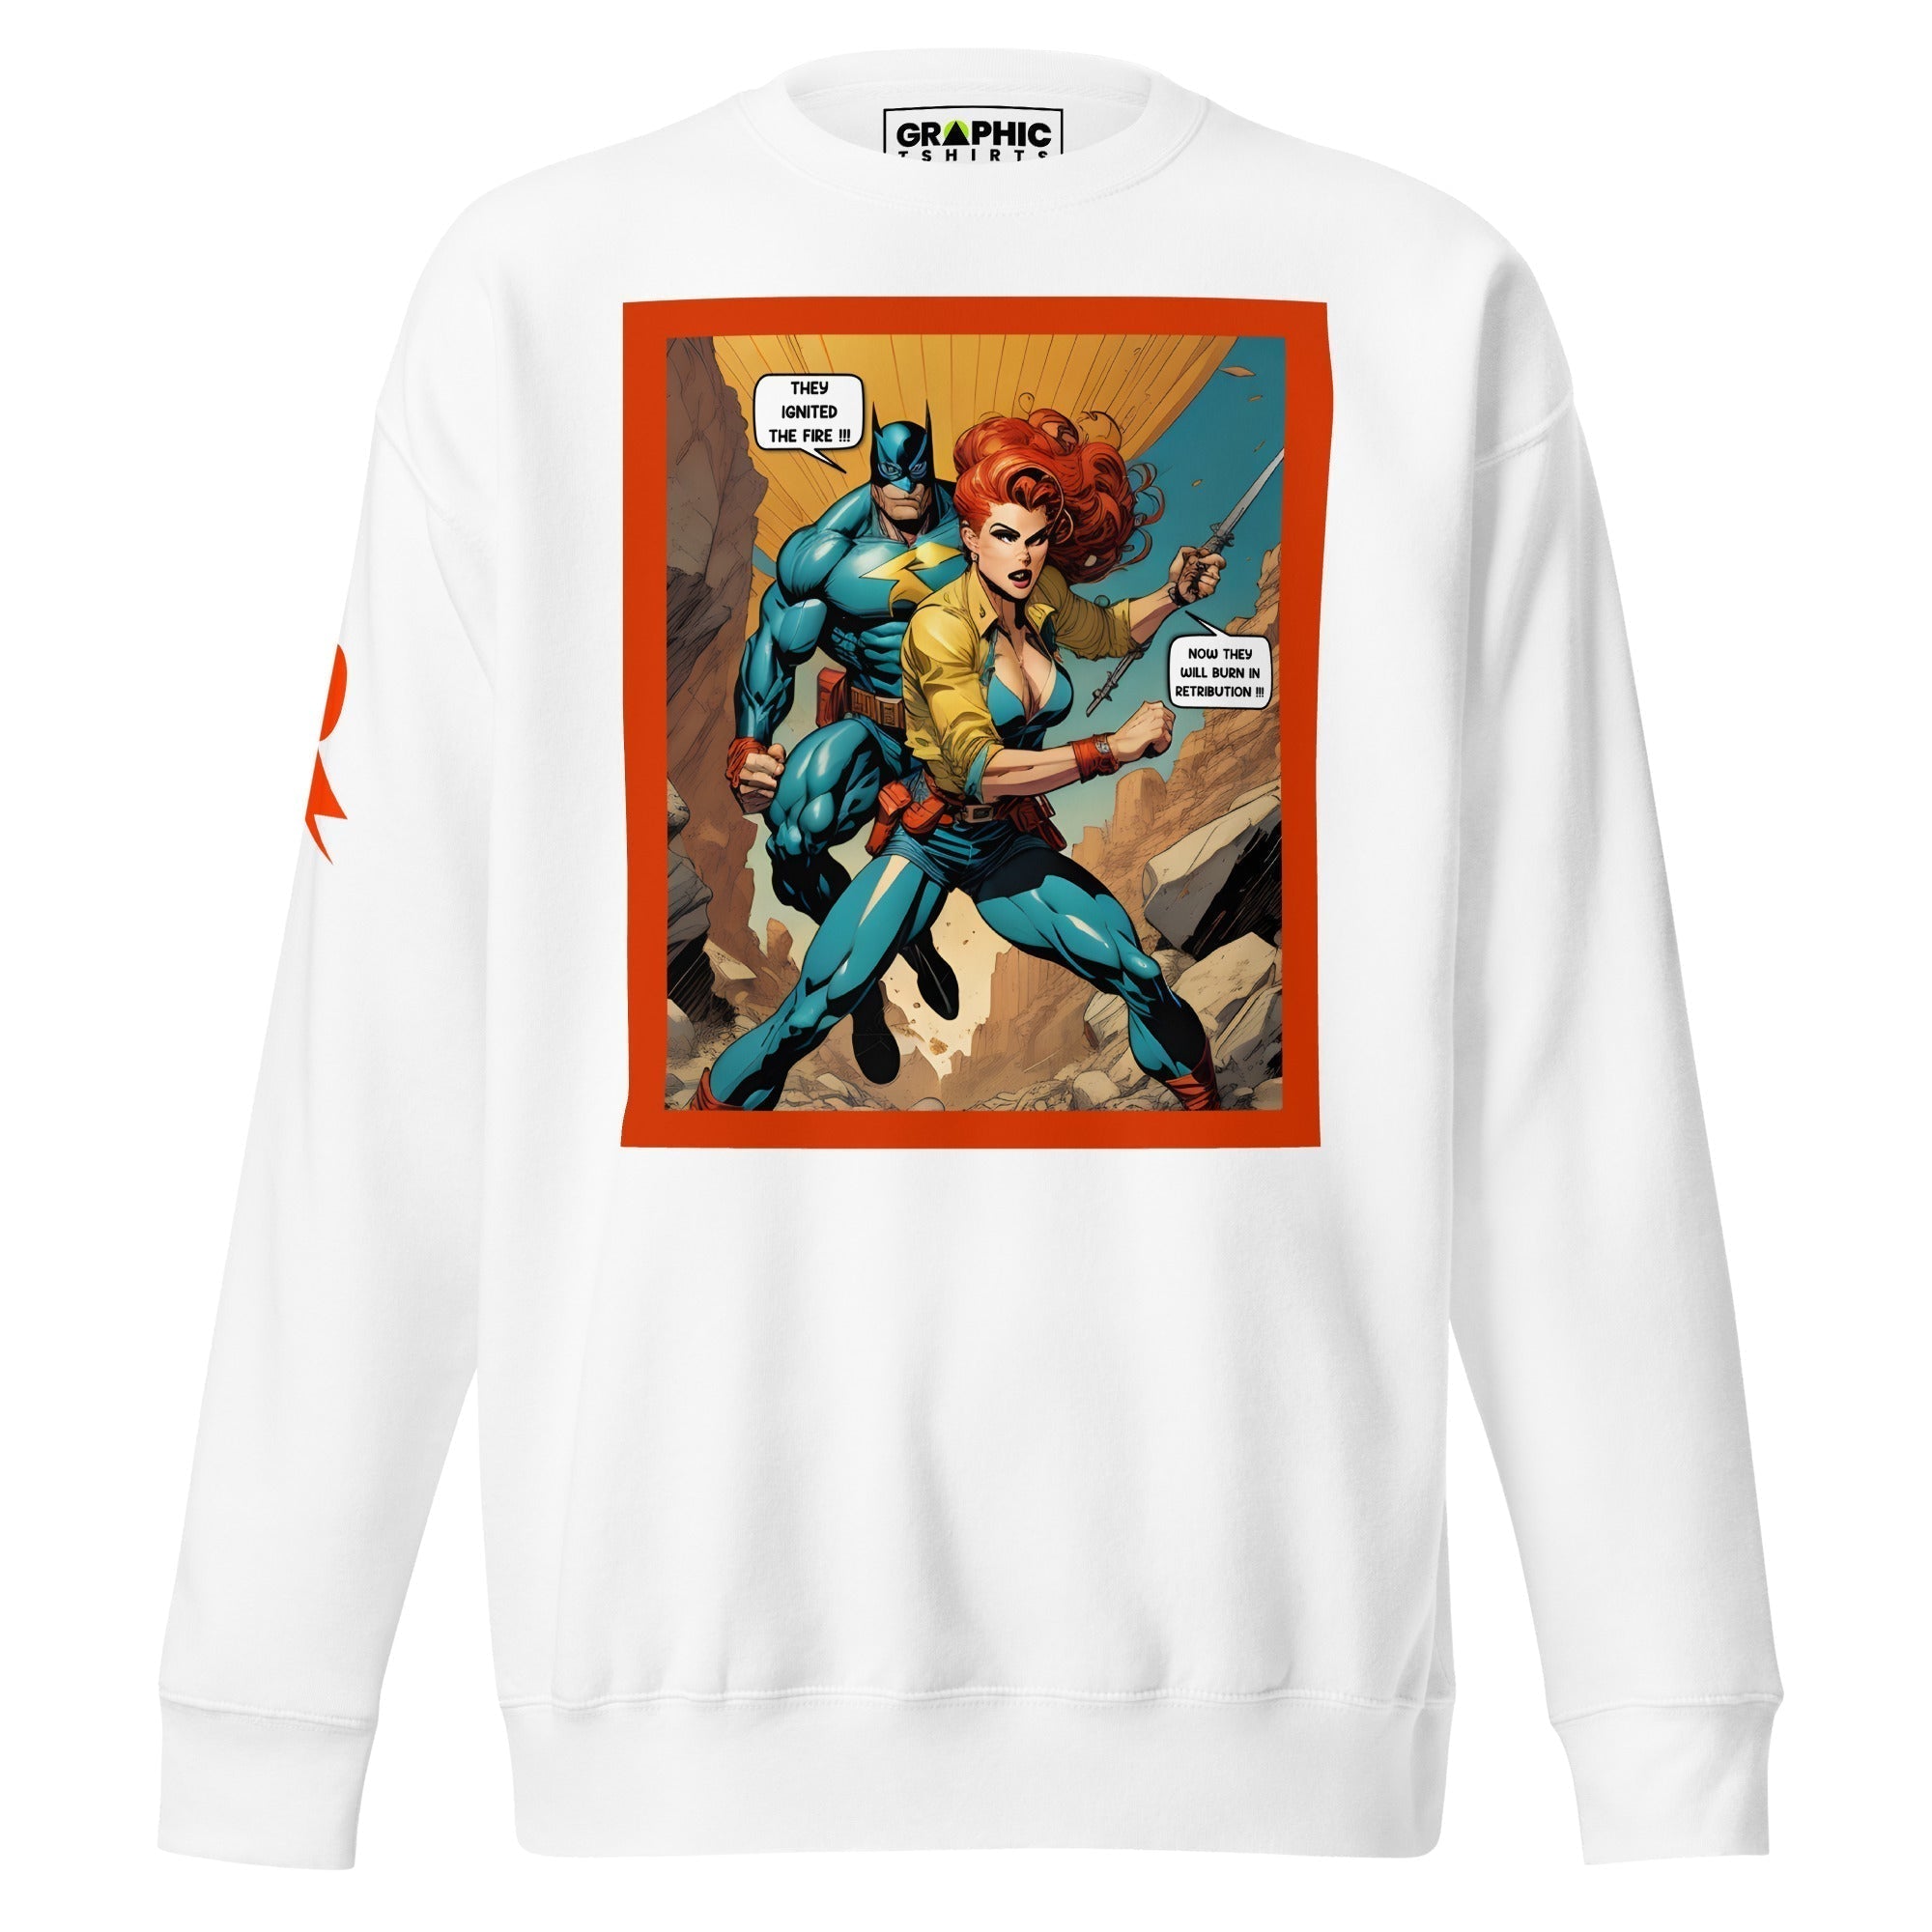 Unisex Premium Sweatshirt - Retribution: Heroes Unleashed v.66 - GRAPHIC T-SHIRTS